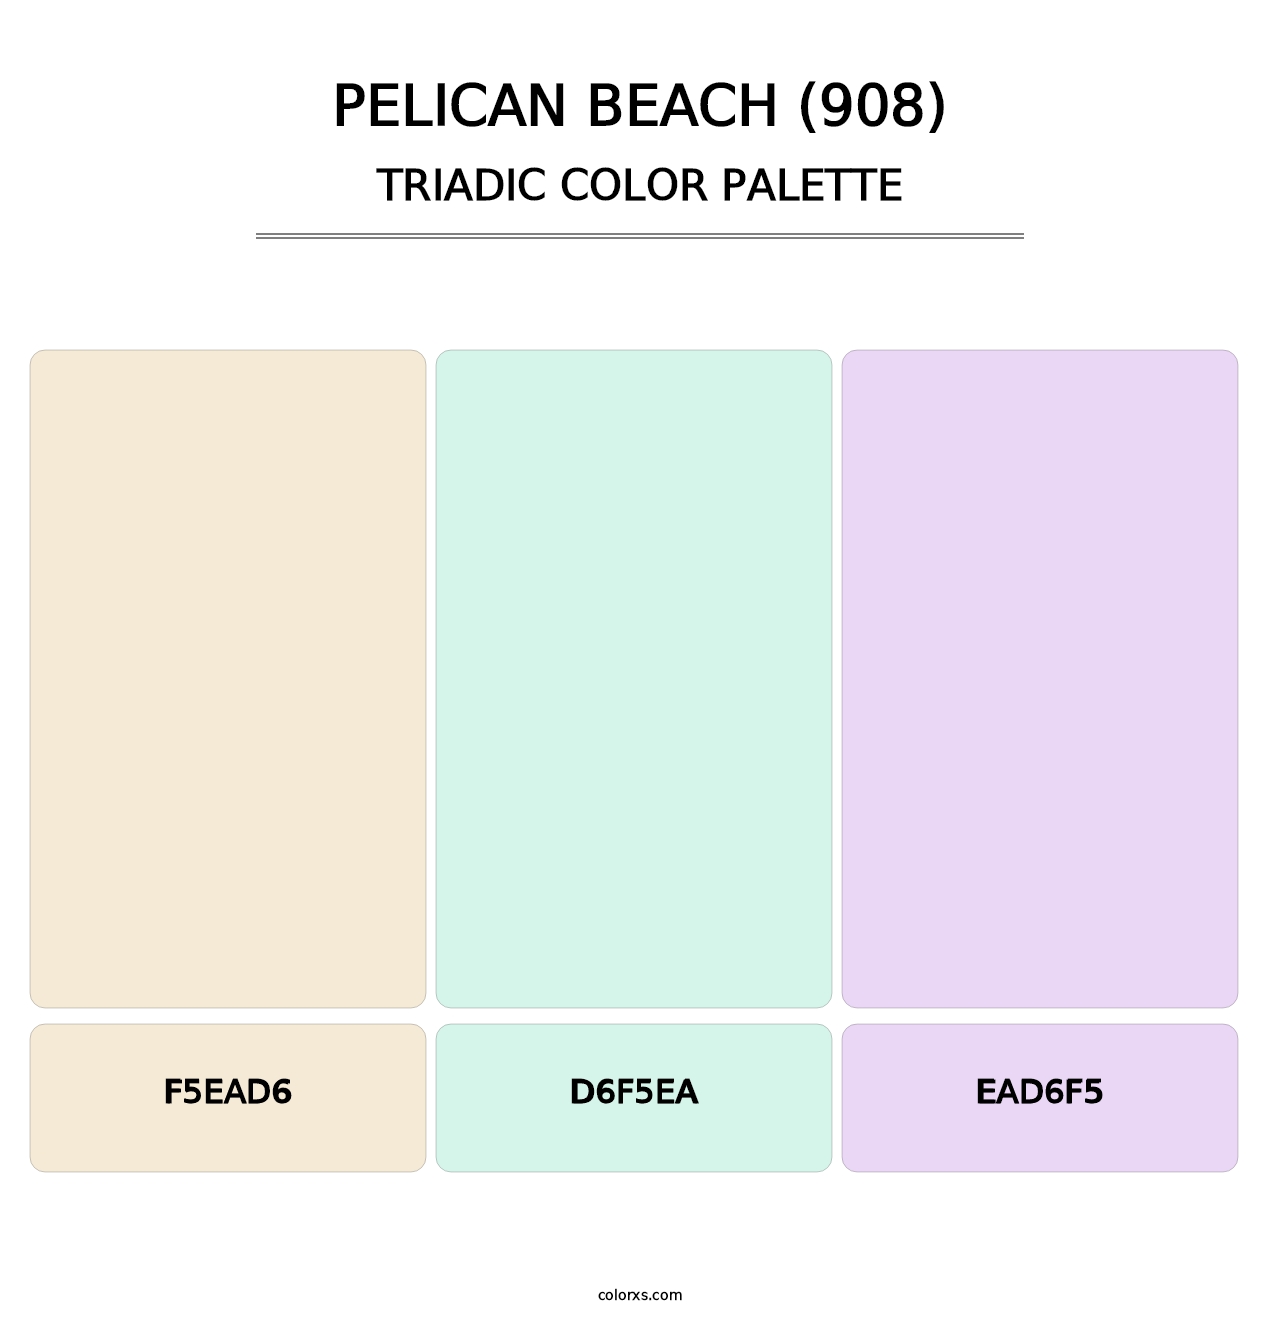 Pelican Beach (908) - Triadic Color Palette